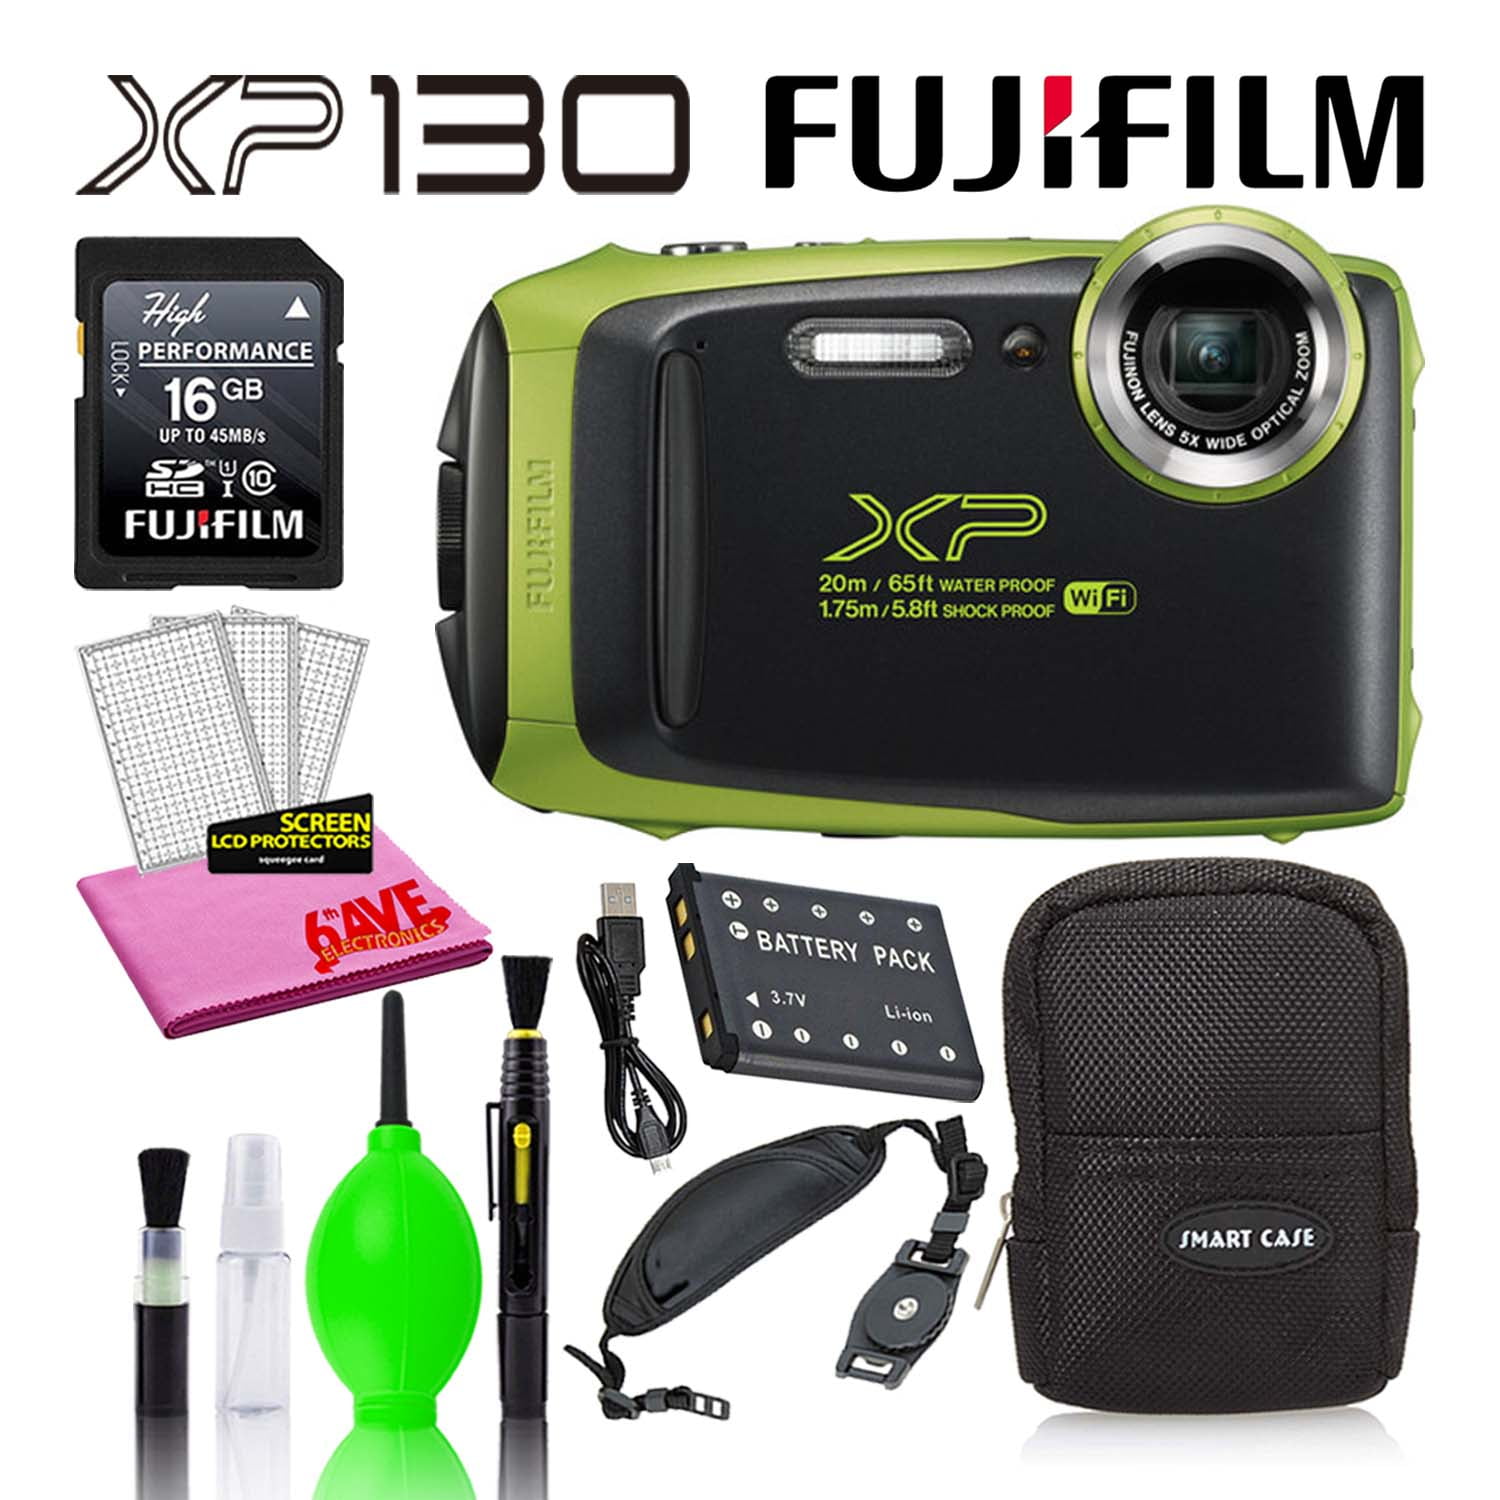 Fujifilm FinePix XP130 Waterproof with 16GB SD Card - Walmart.com